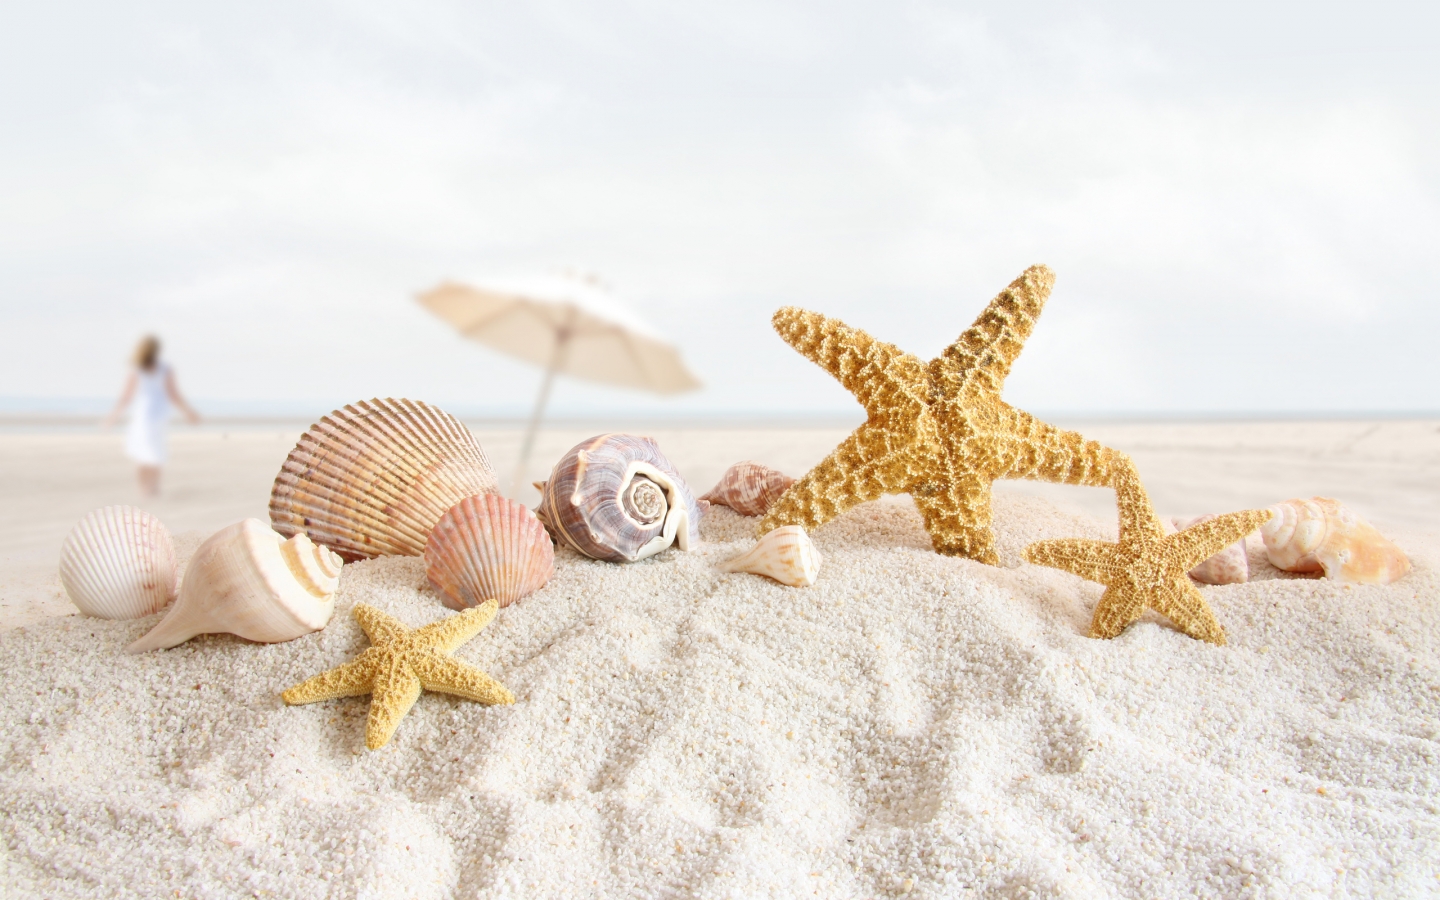 Seashells and Starfish for 1440 x 900 widescreen resolution